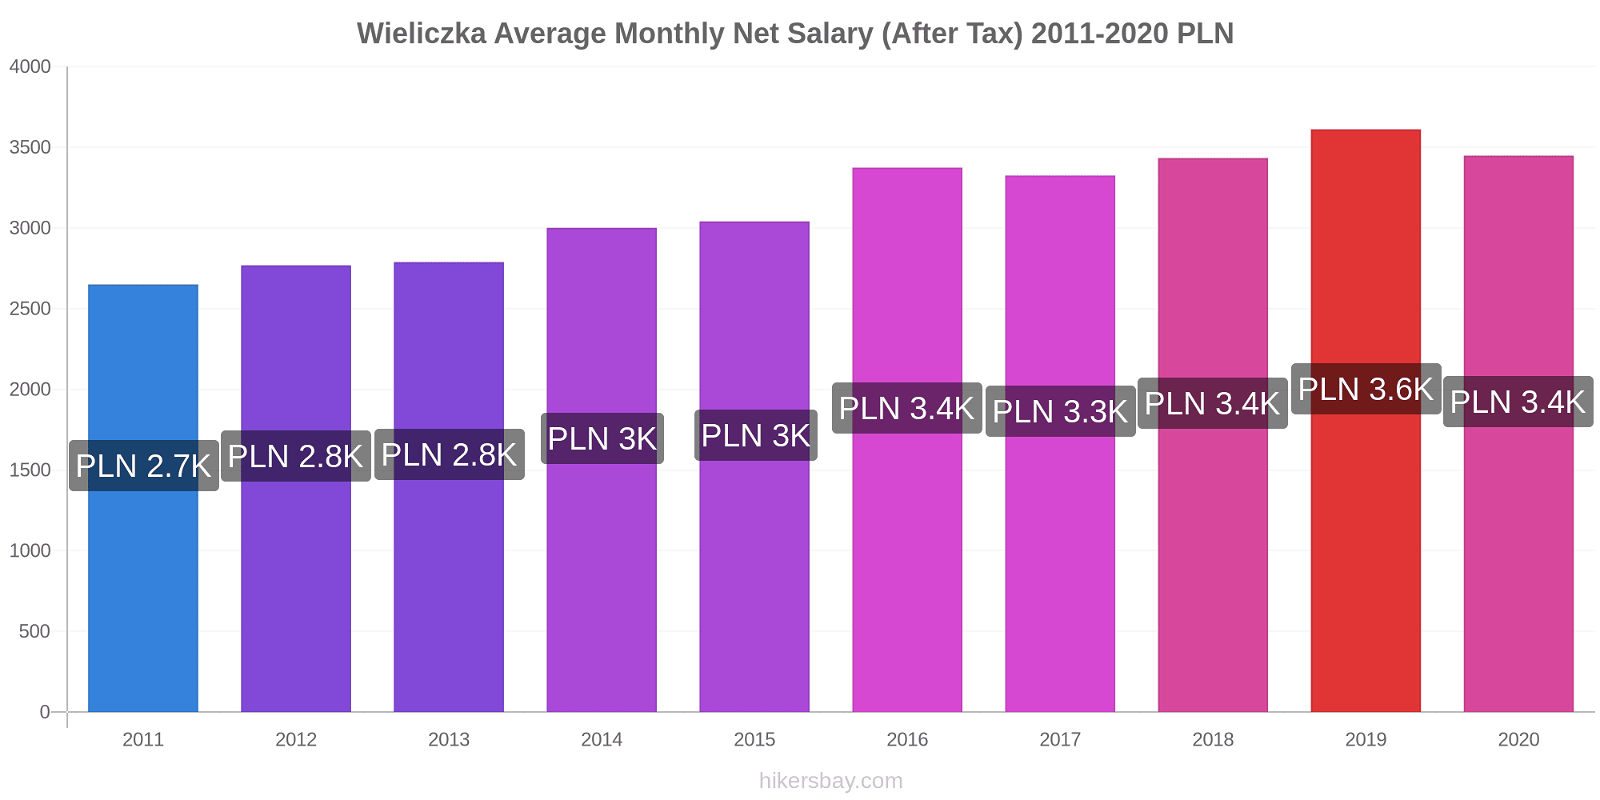 Wieliczka price changes Average Monthly Net Salary (After Tax) hikersbay.com